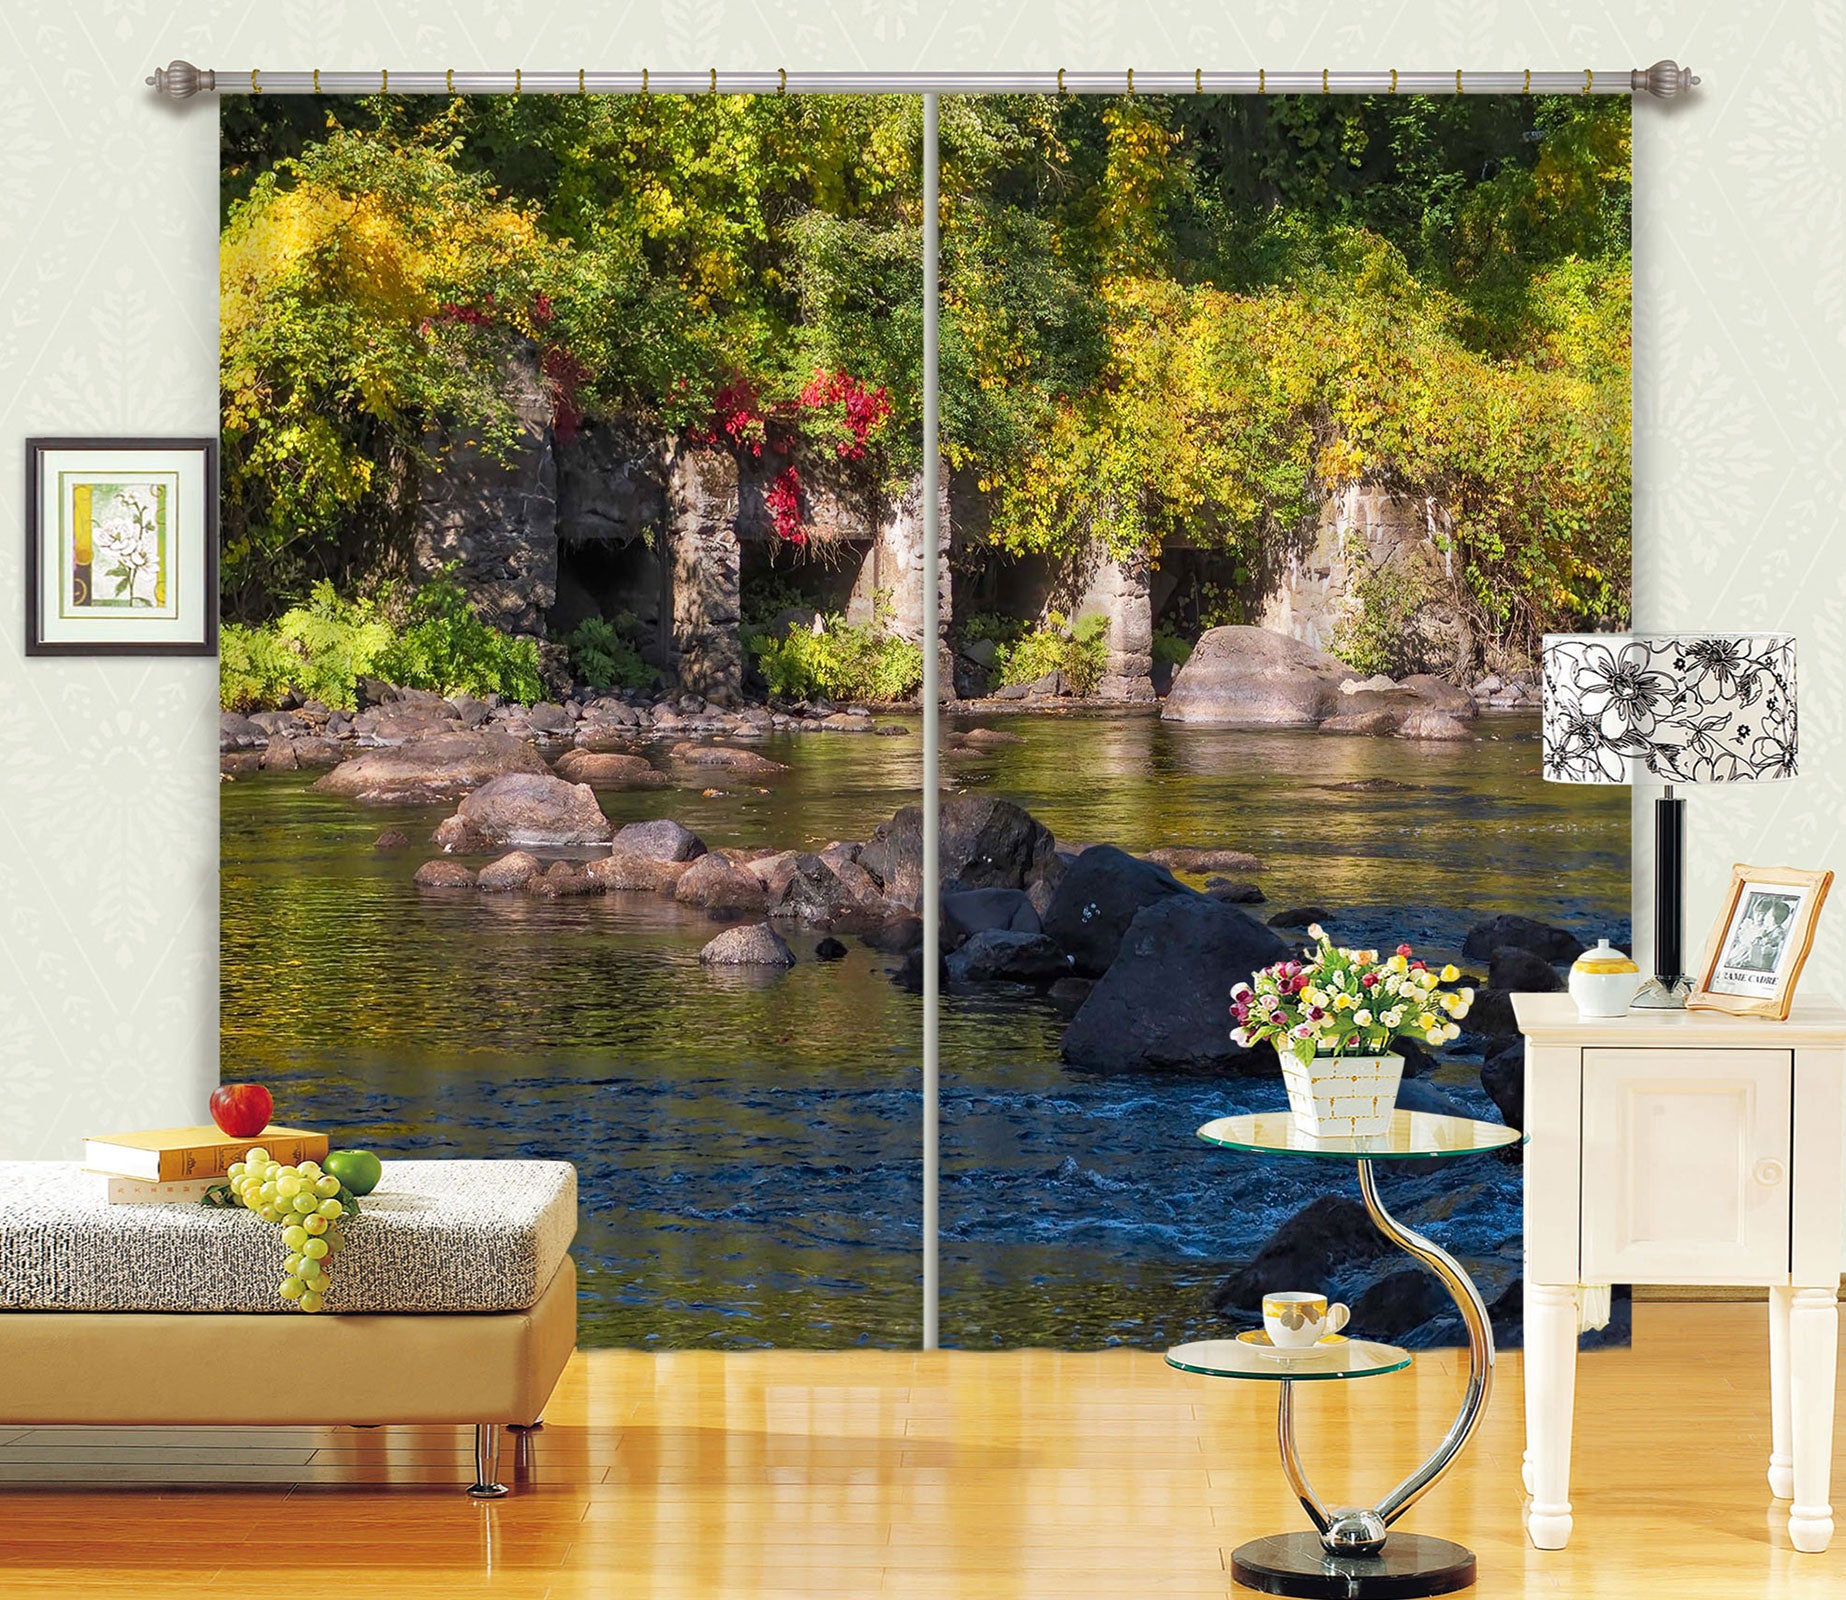 3D Stones River 018 Jerry LoFaro Curtain Curtains Drapes